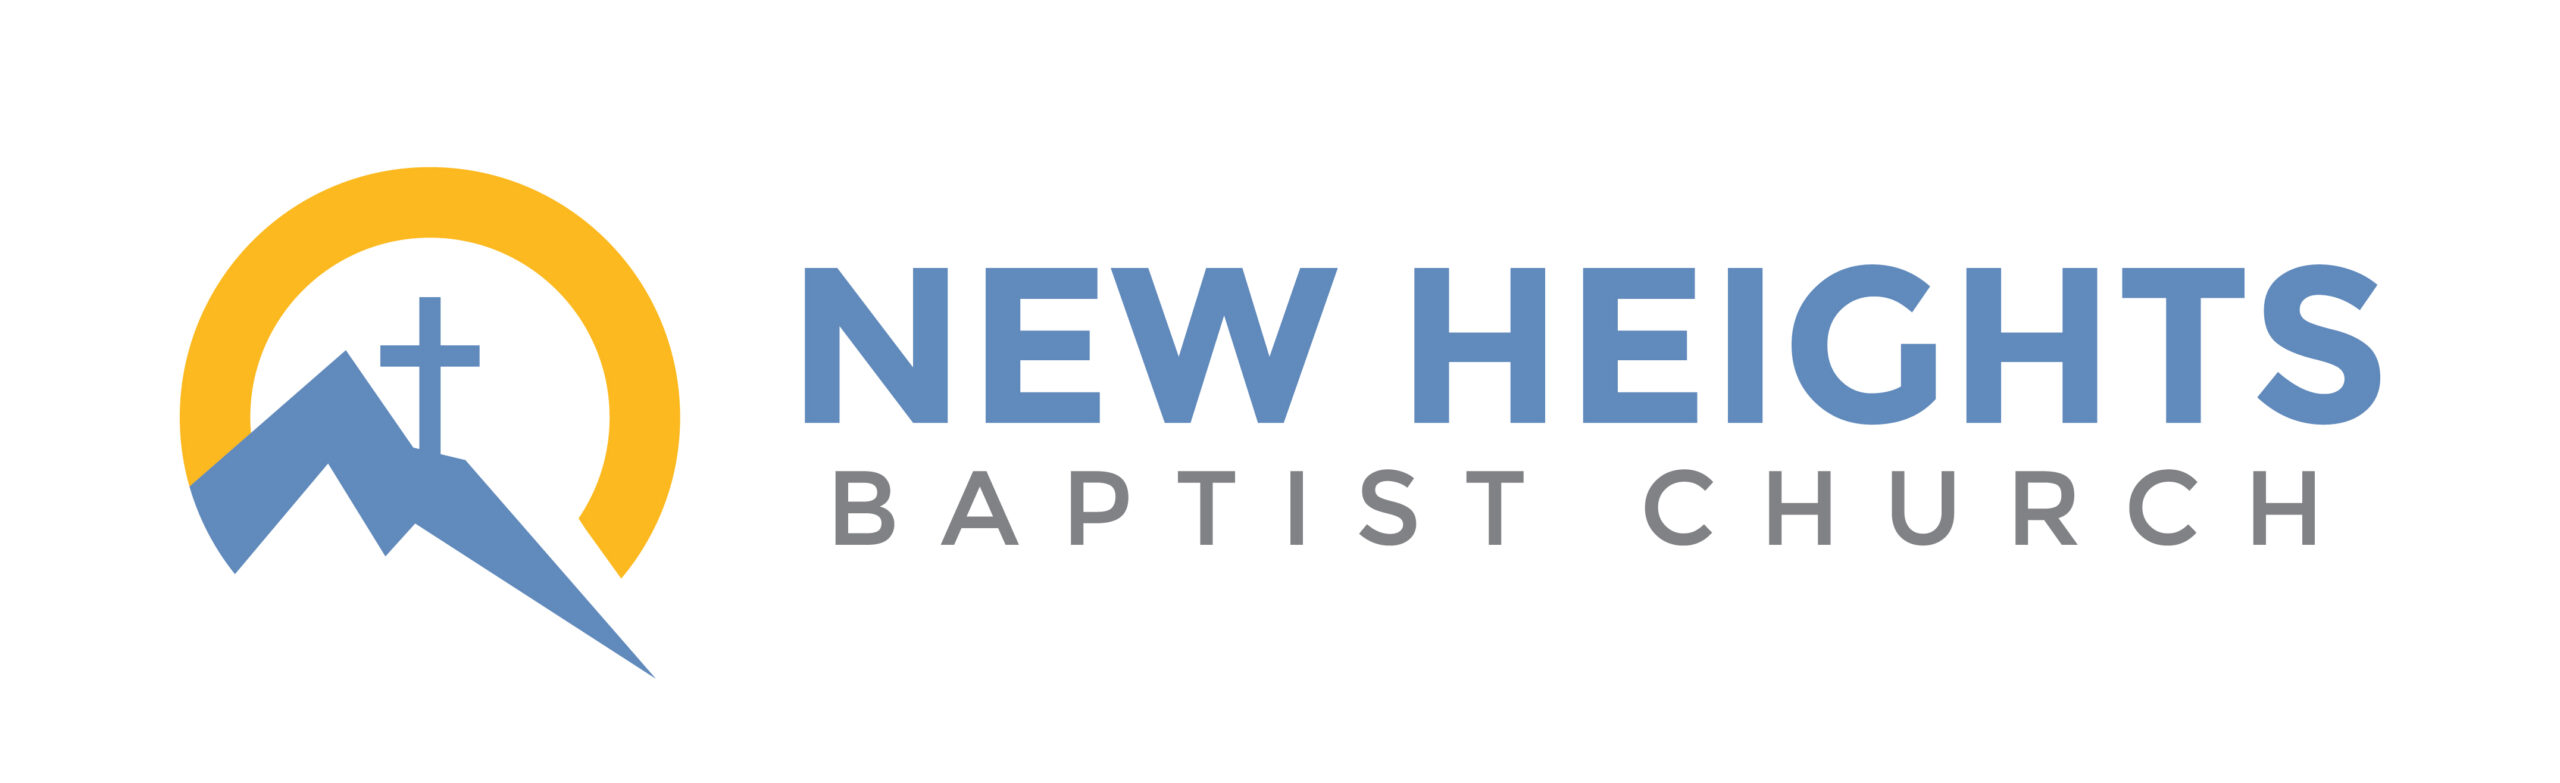 New Heights Baptist Church